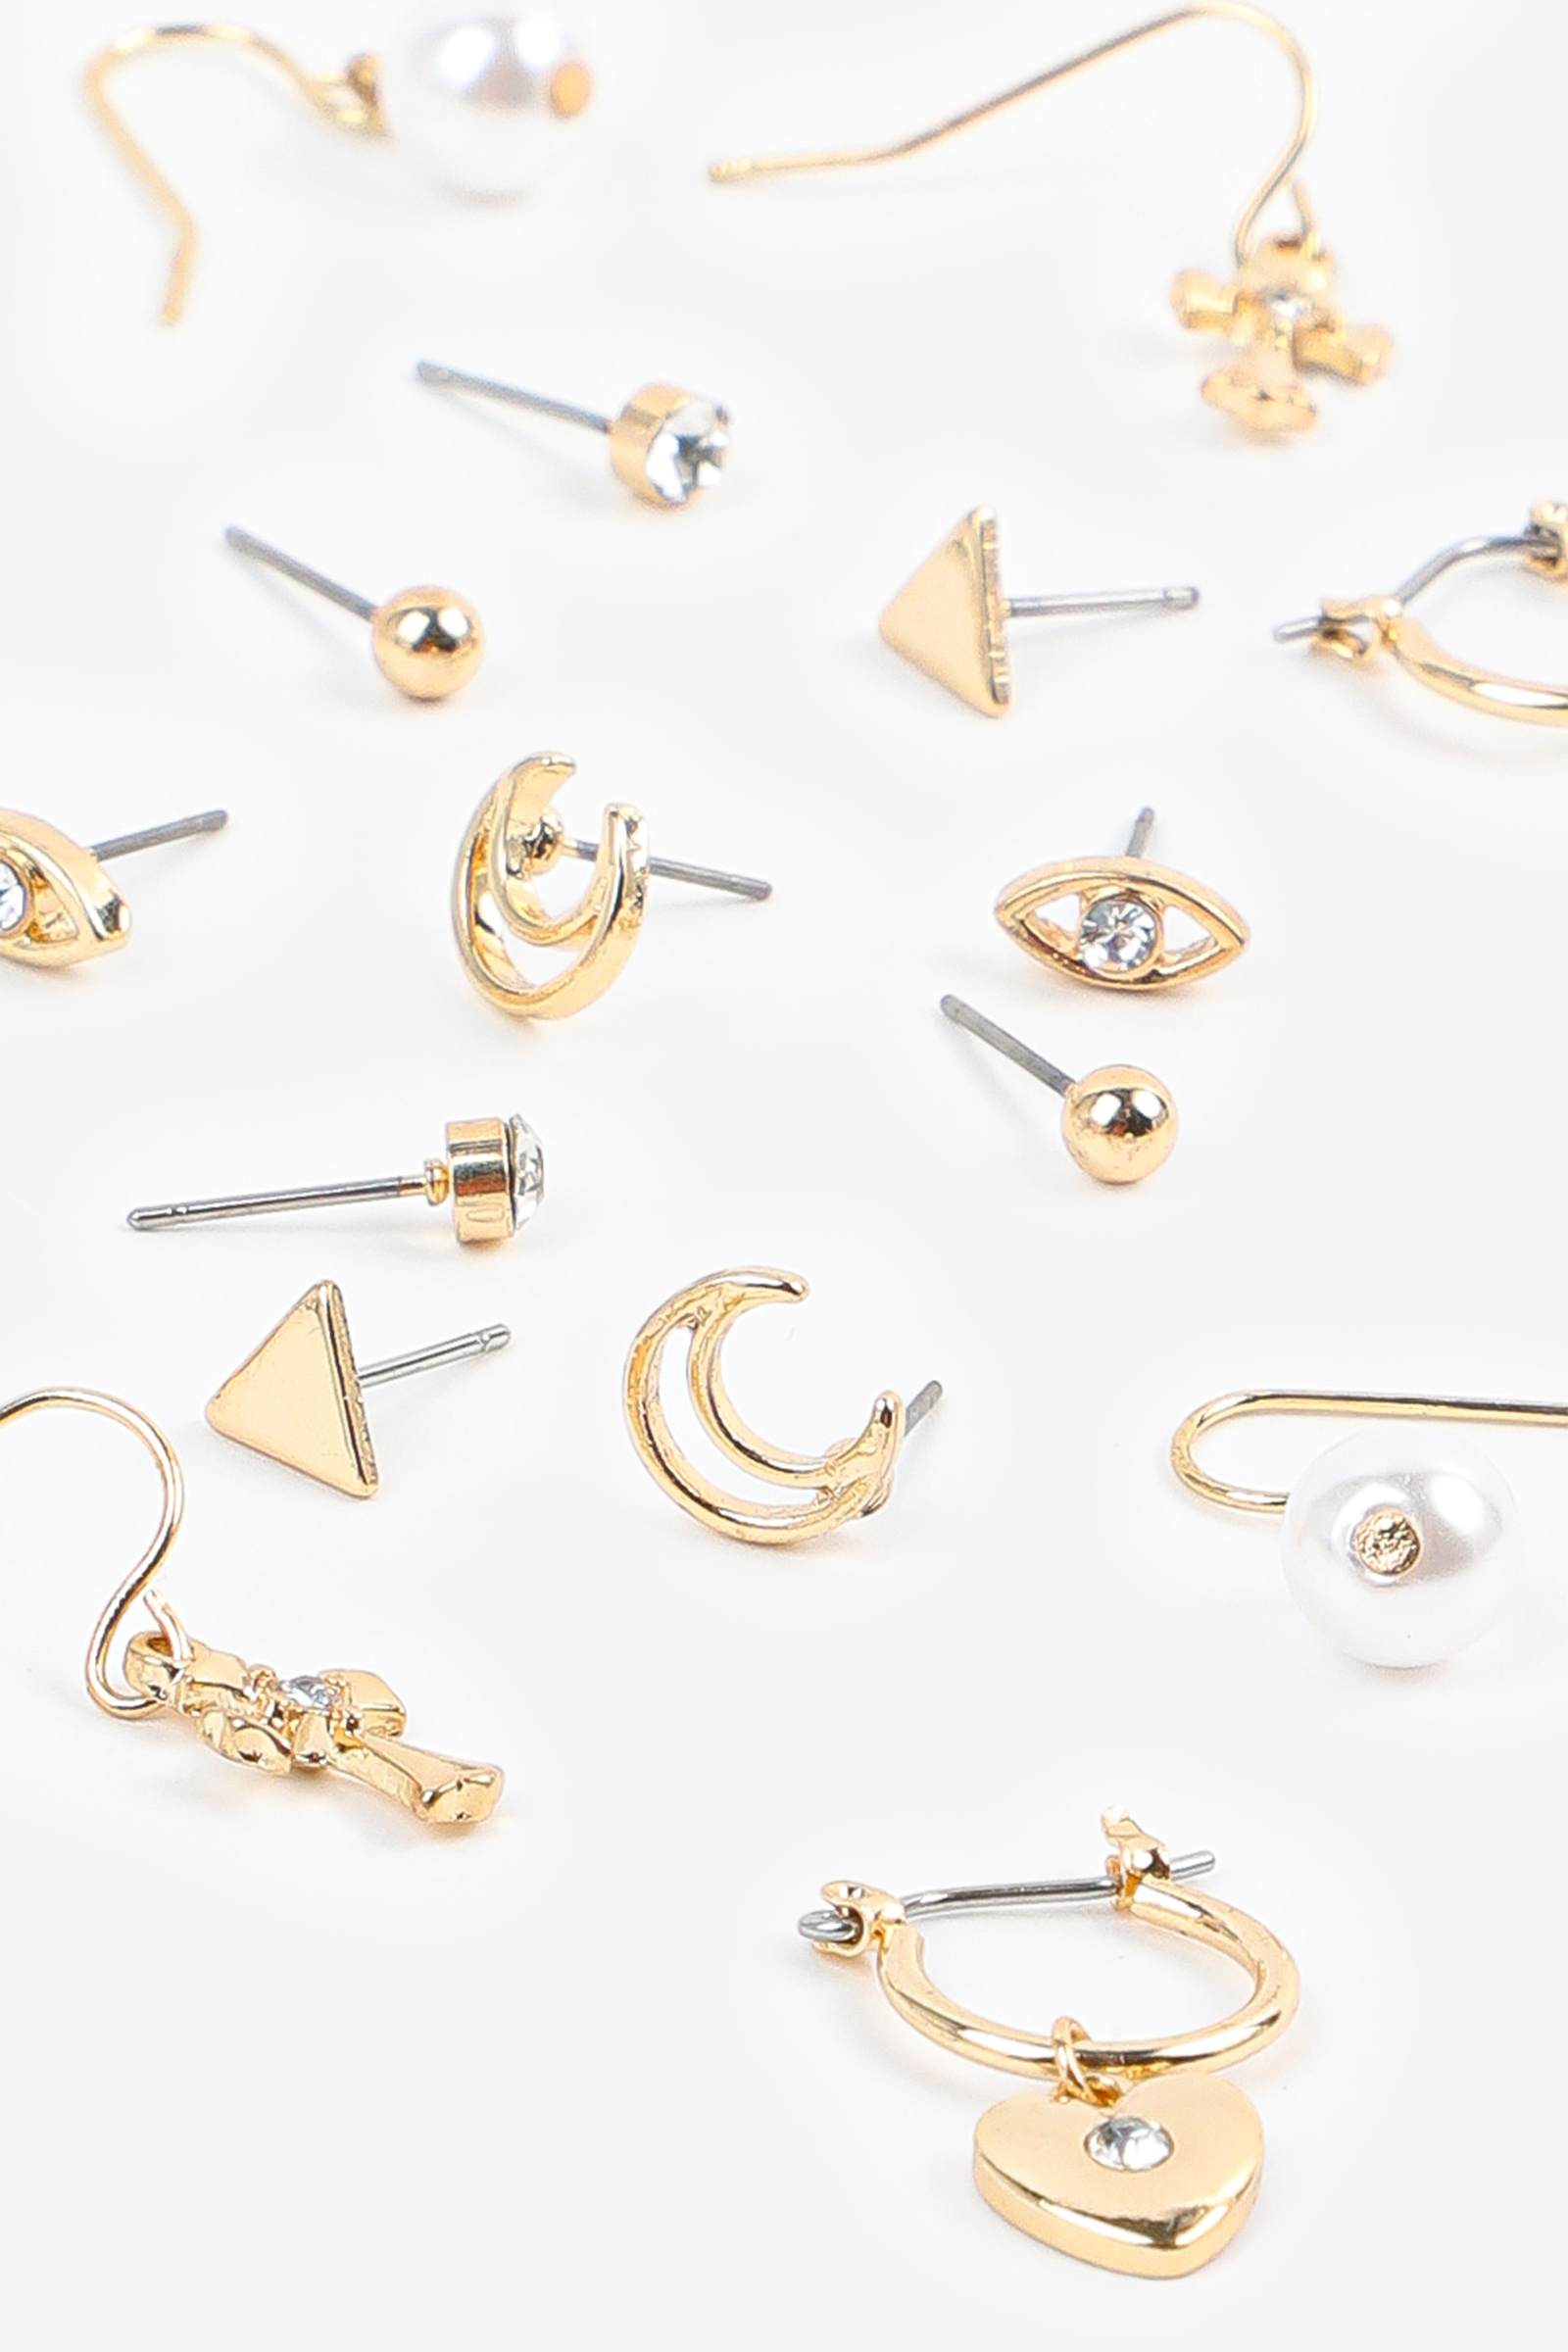 Ardene Pack of Assorted Gold Tone Earrings | Stainless Steel